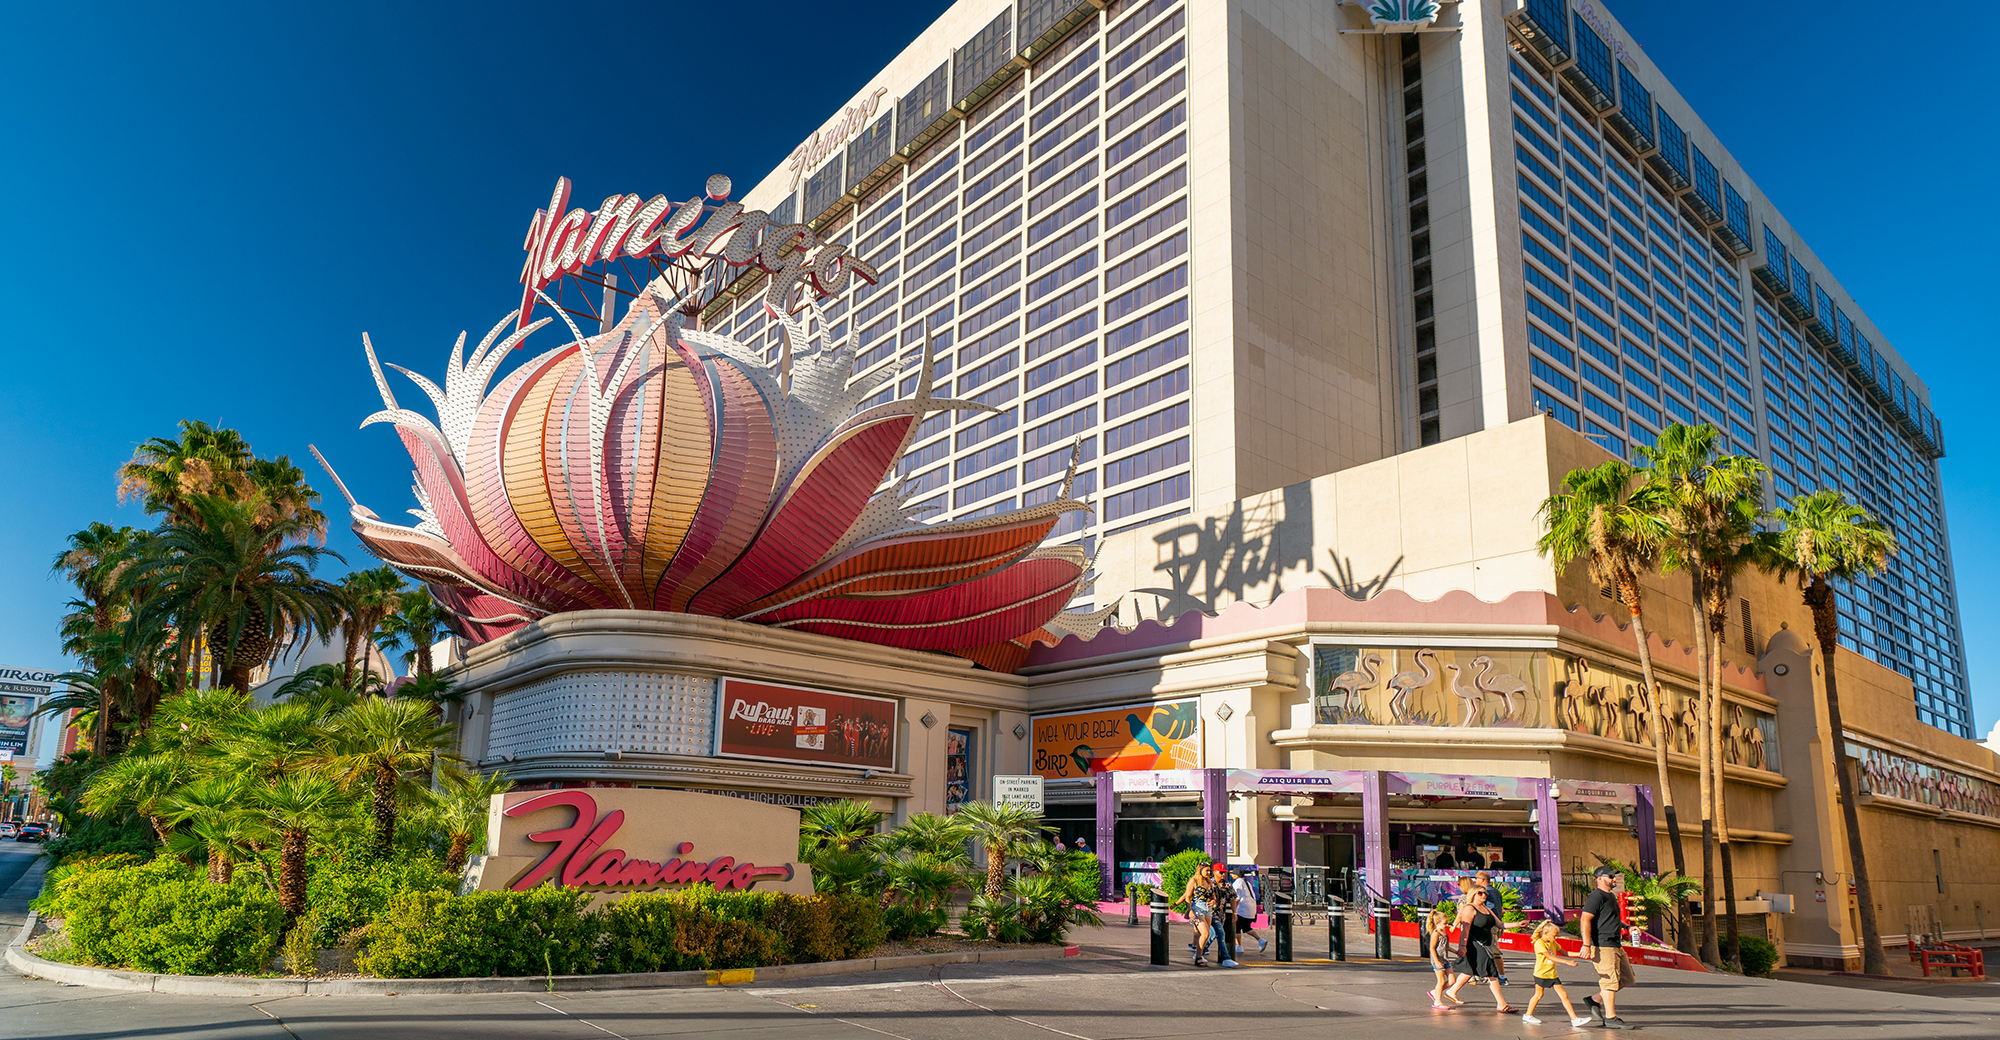 Flamingo Las Vegas Hotel and Casino Right on the Strip